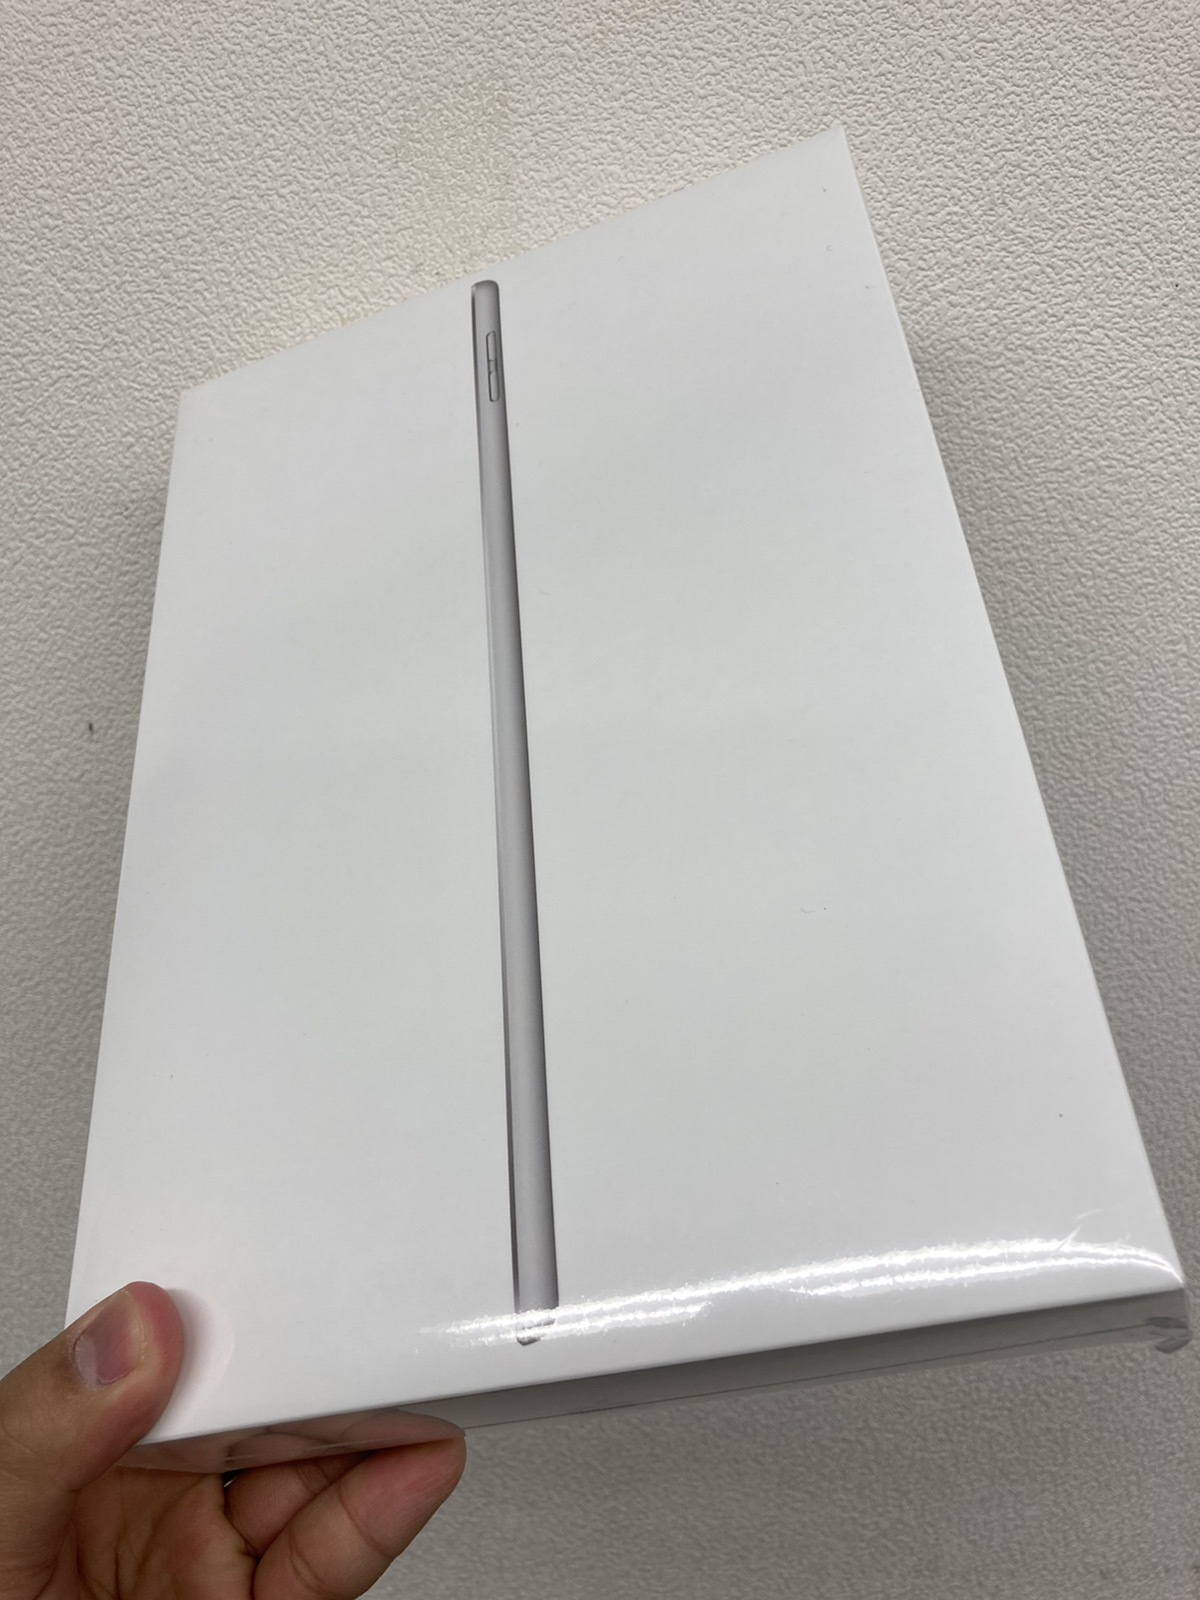 iPad8(2020) 32GB Wi-Fi新品未開封